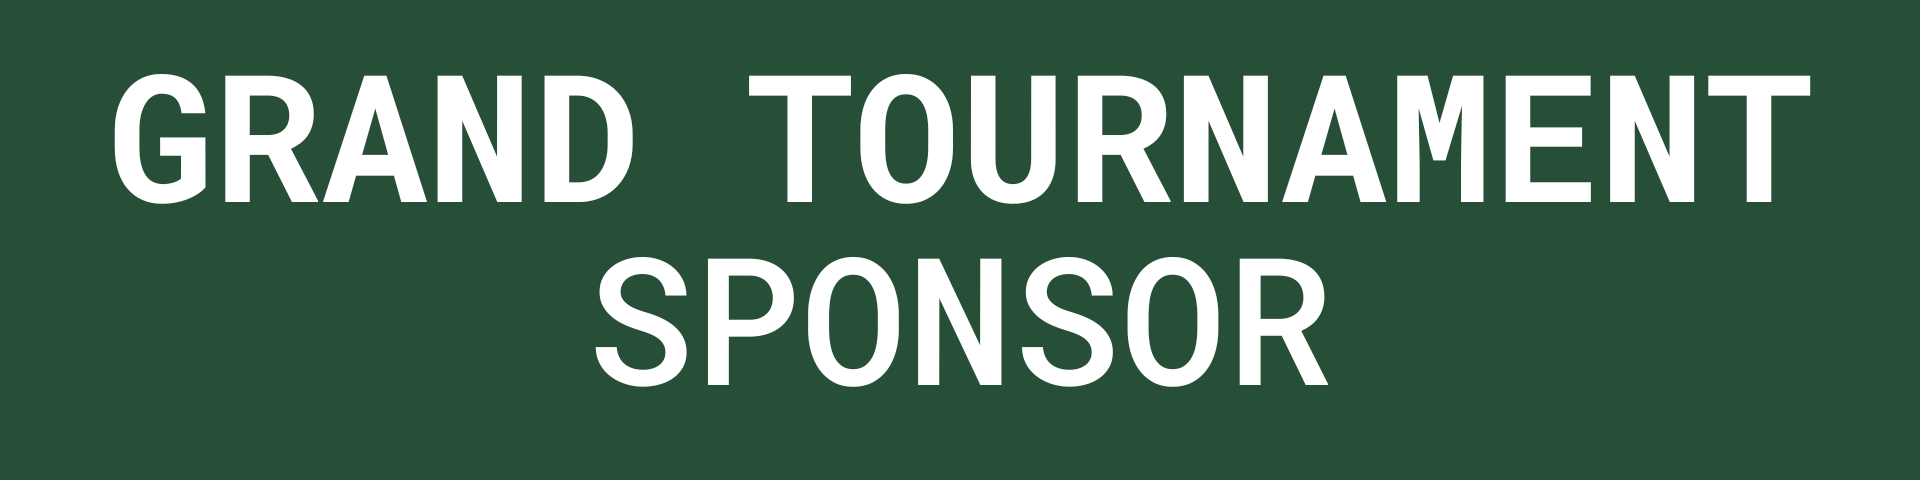 golf-sponsorship-grand.png